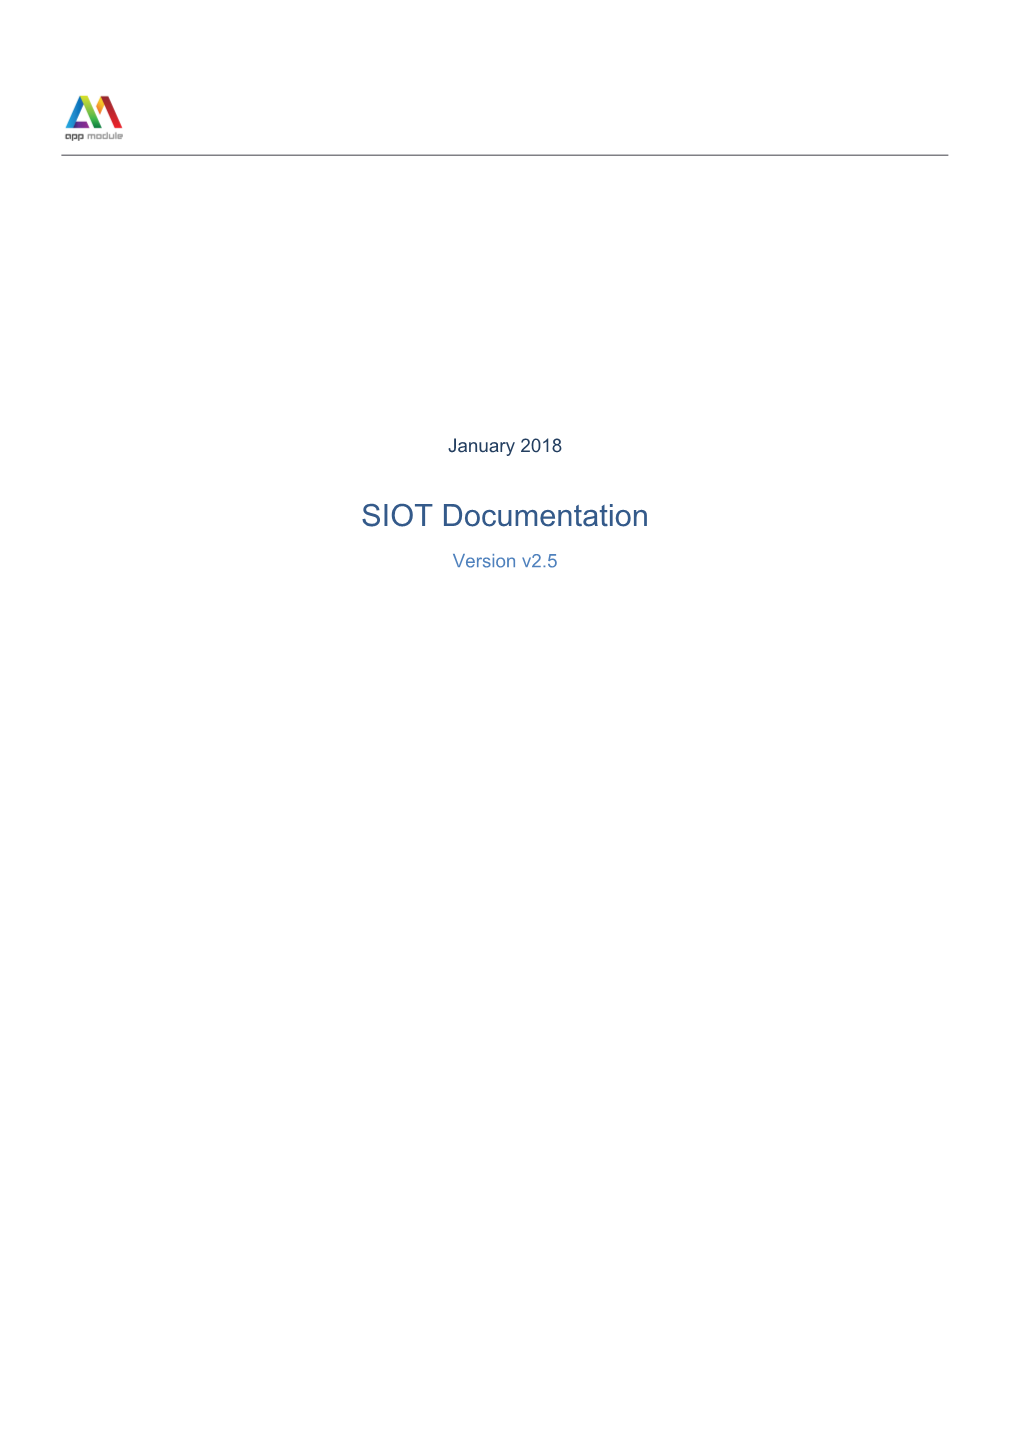 SIOT Documentation